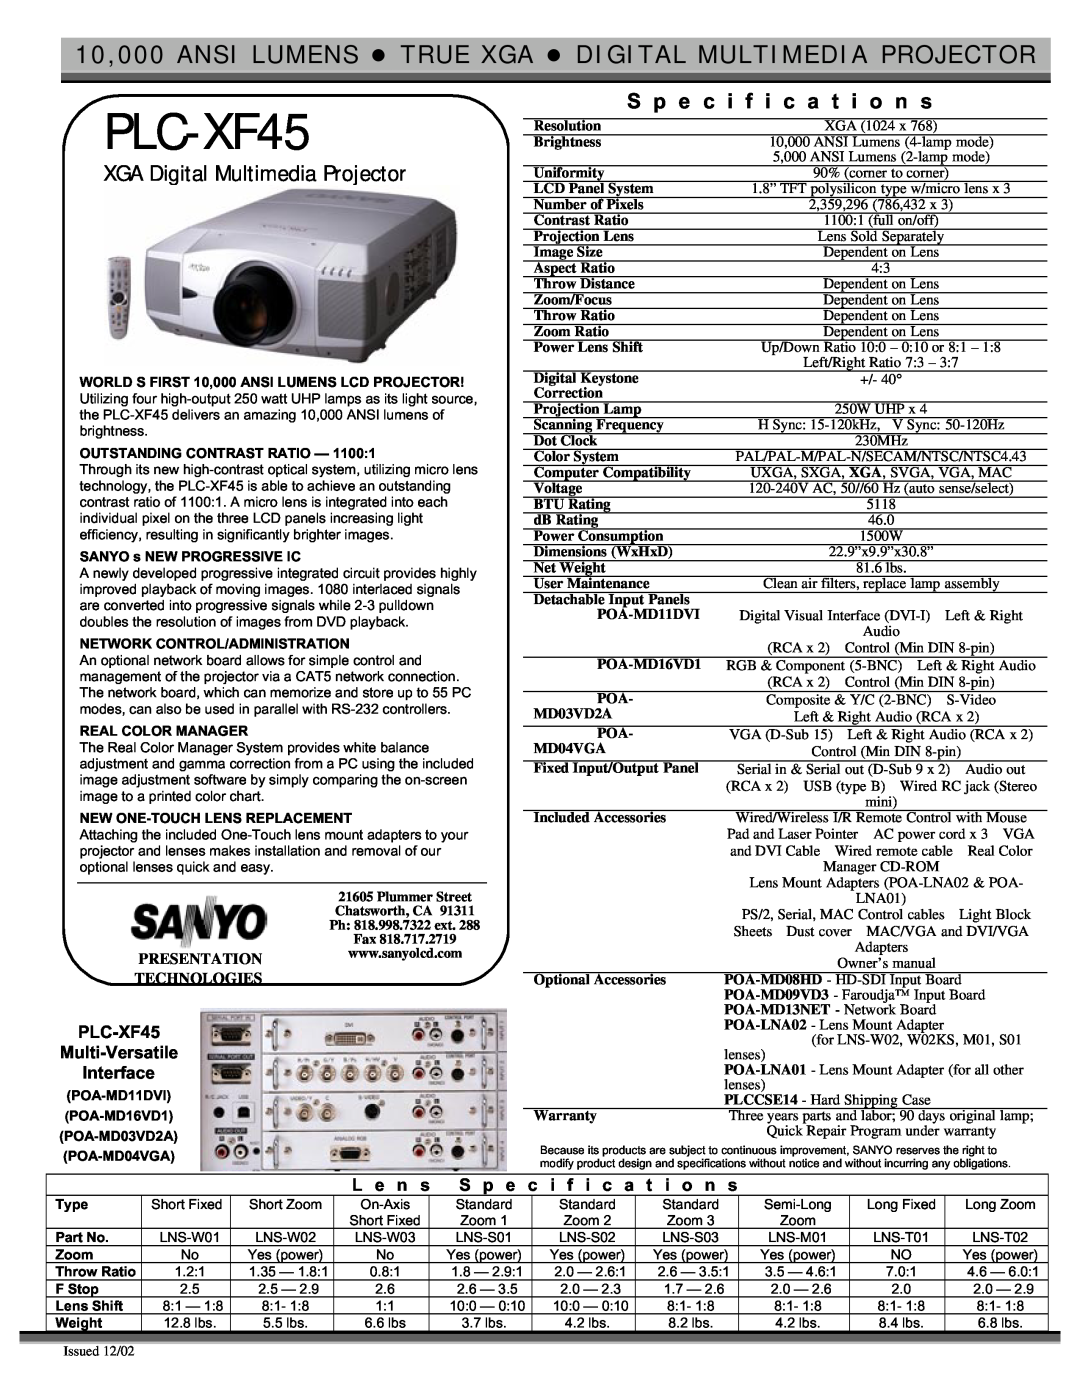 Sanyo PLC-XF45 specifications XGA Digital Multimedia Projector, S p e c i f i c a t i o n s, L e n s 